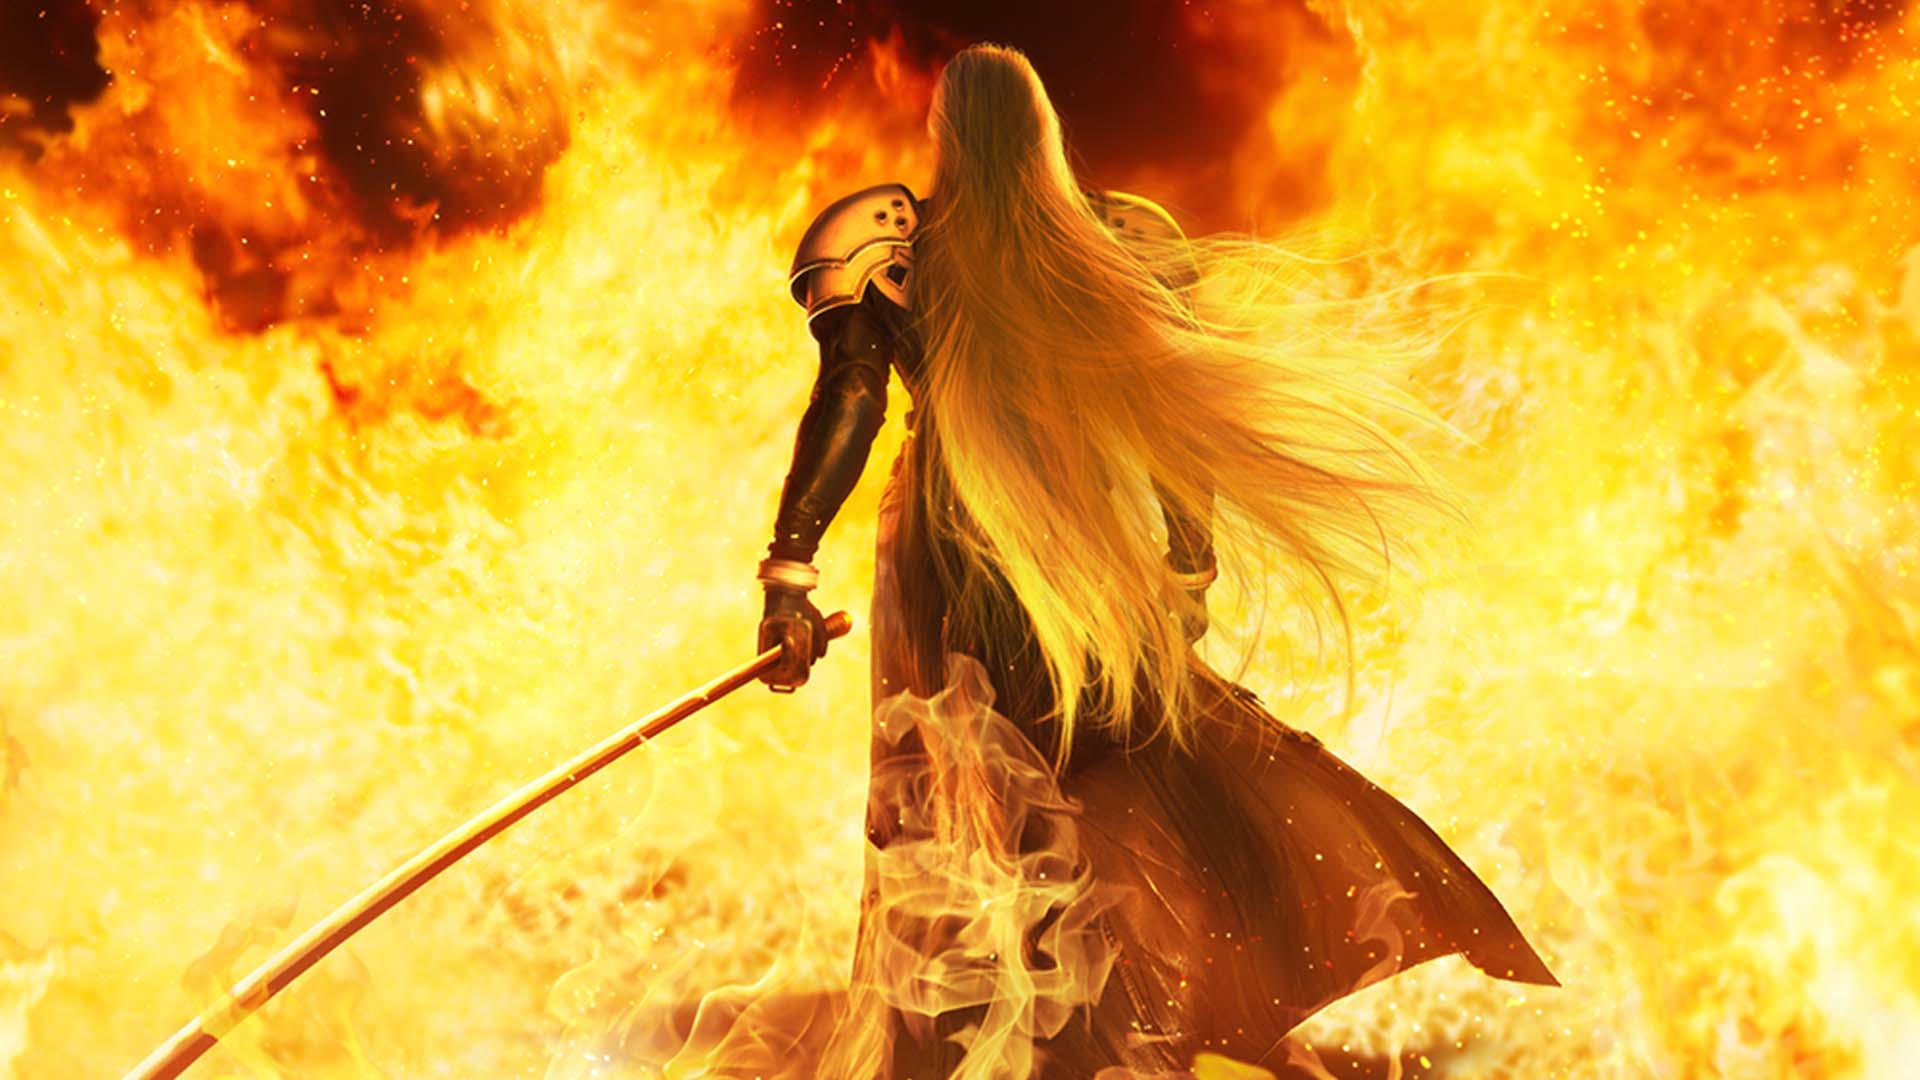 Final Fantasy 7 Remake screenshots show more Sephiroth, Aerith